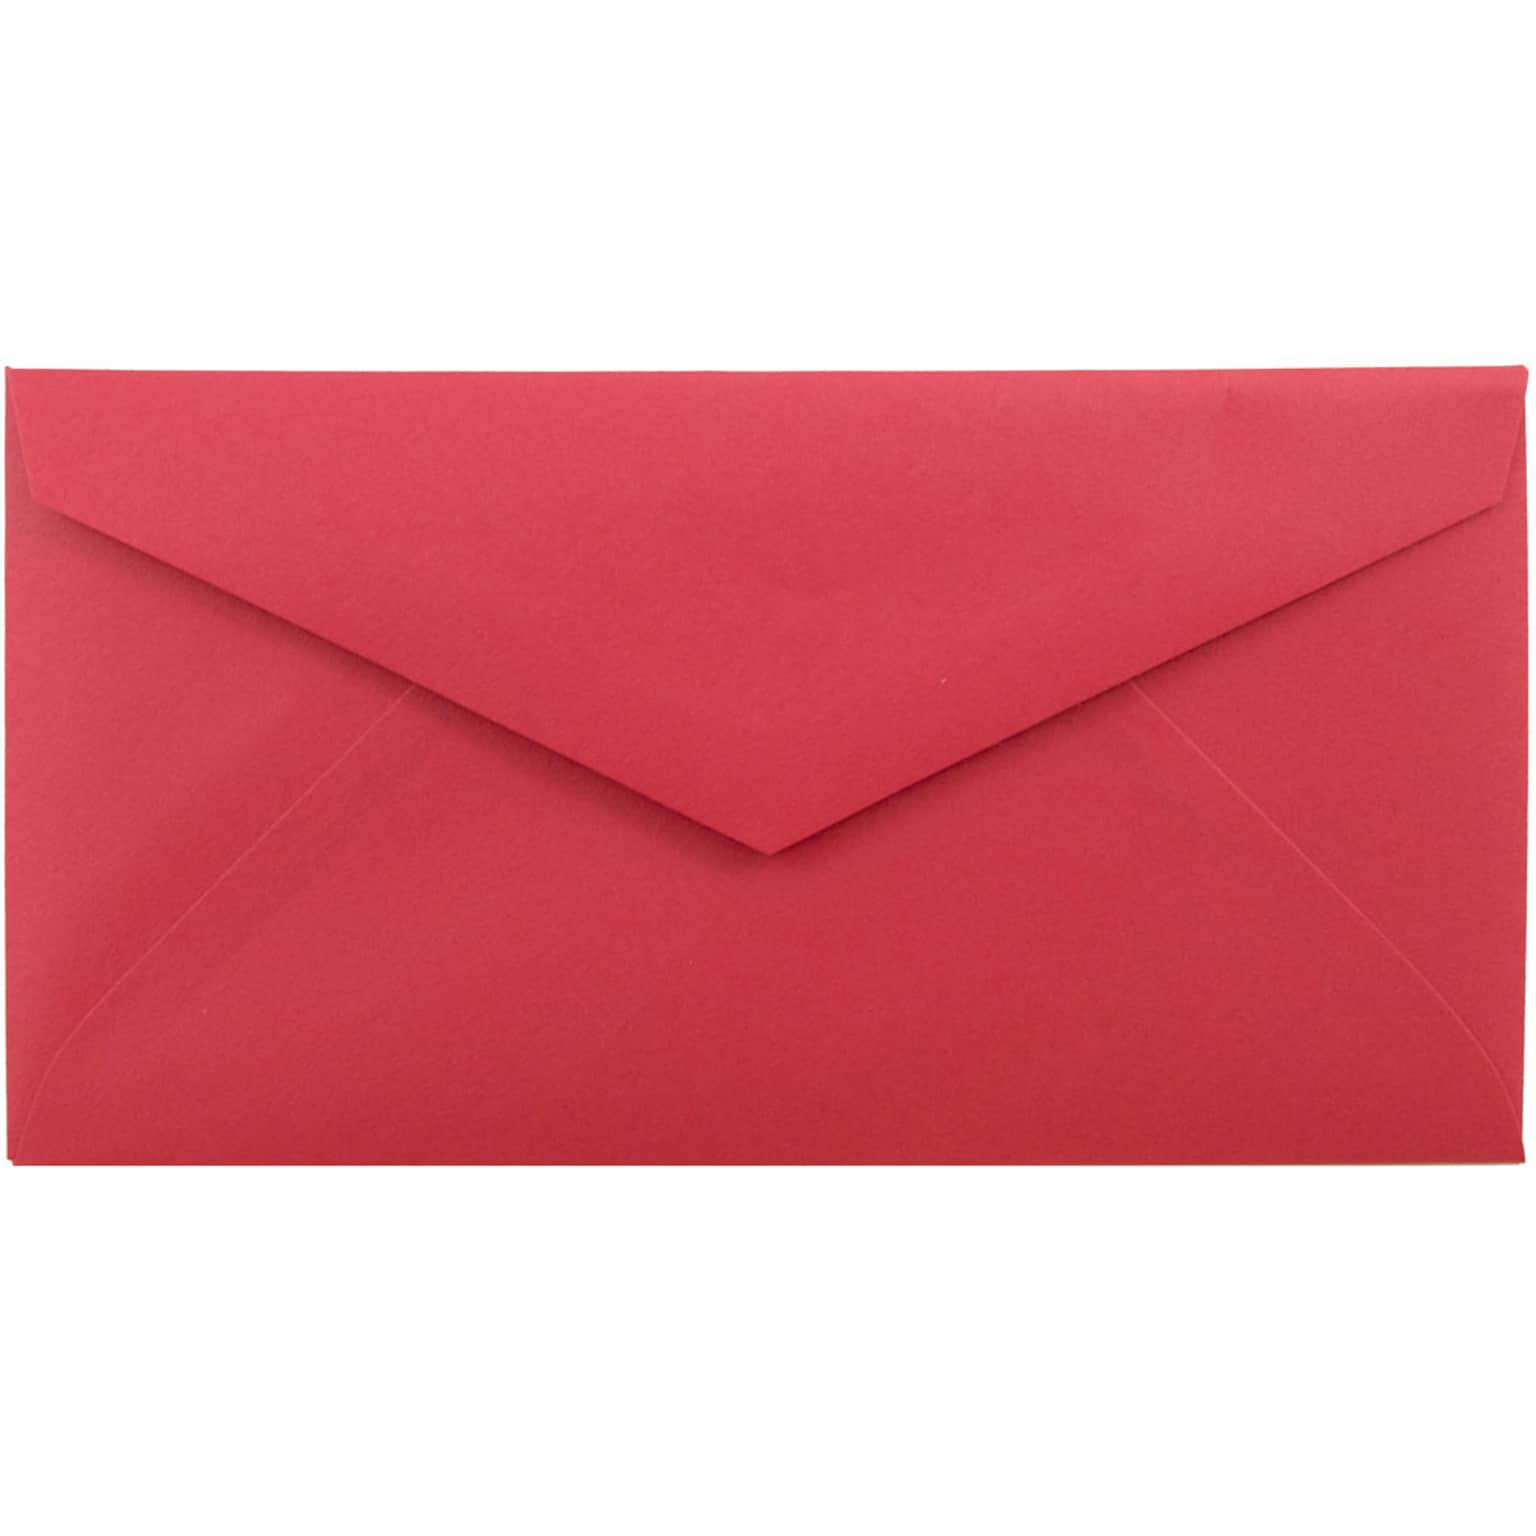 JAM Paper Monarch Open End Invitation Envelope, 3 7/8 x 7 1/2, Brite Hue Red, 50/Pack (151014I)